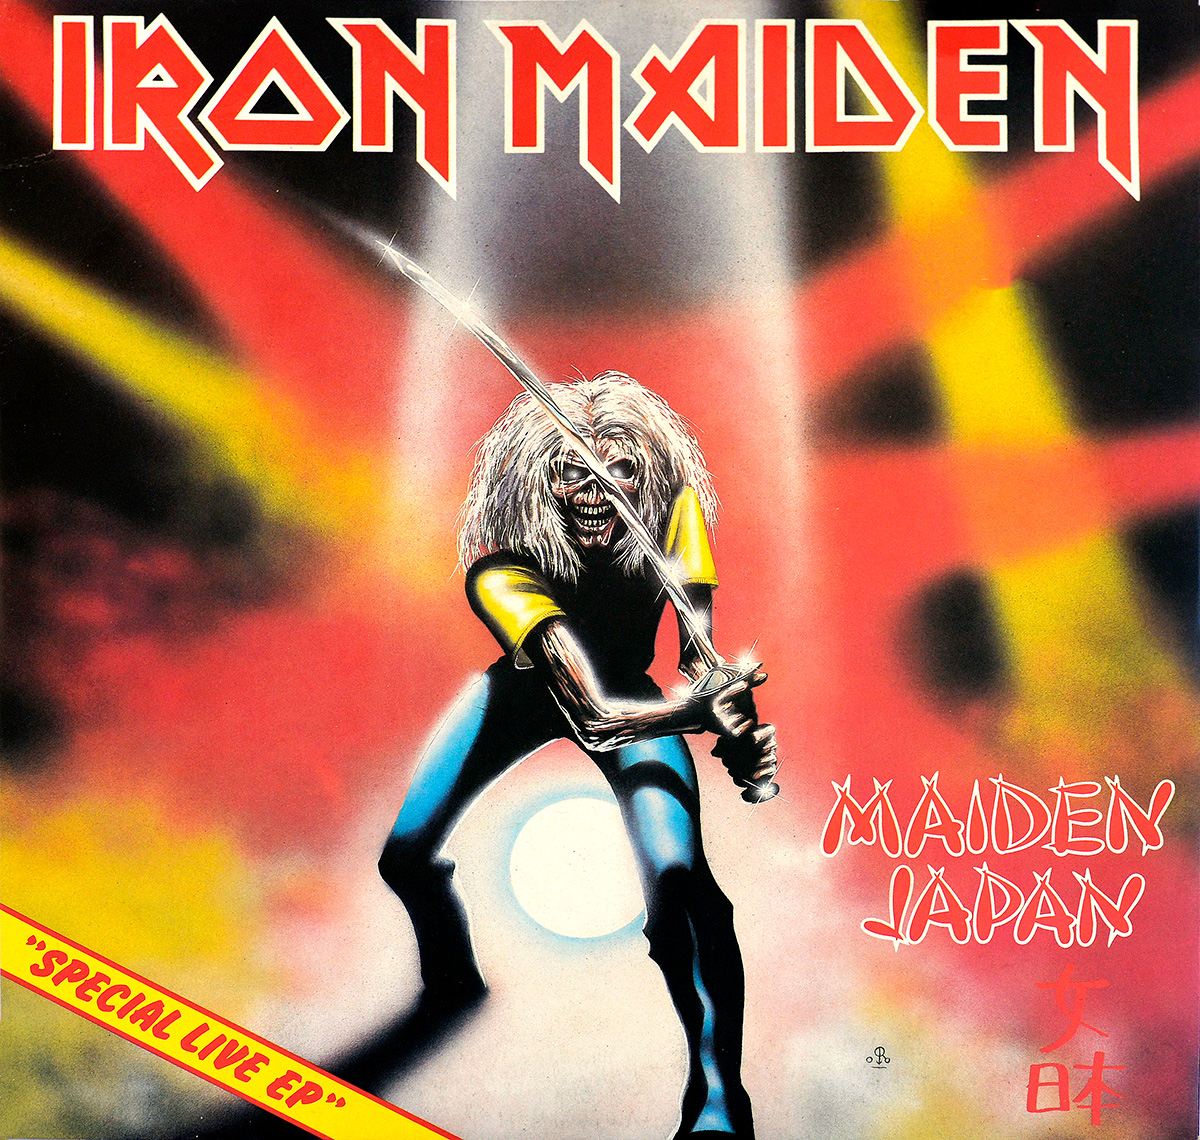 Front Cover Photo Of IRON MAIDEN Maiden Japan German Release 12" MAXI-EP ALBUM VINYL